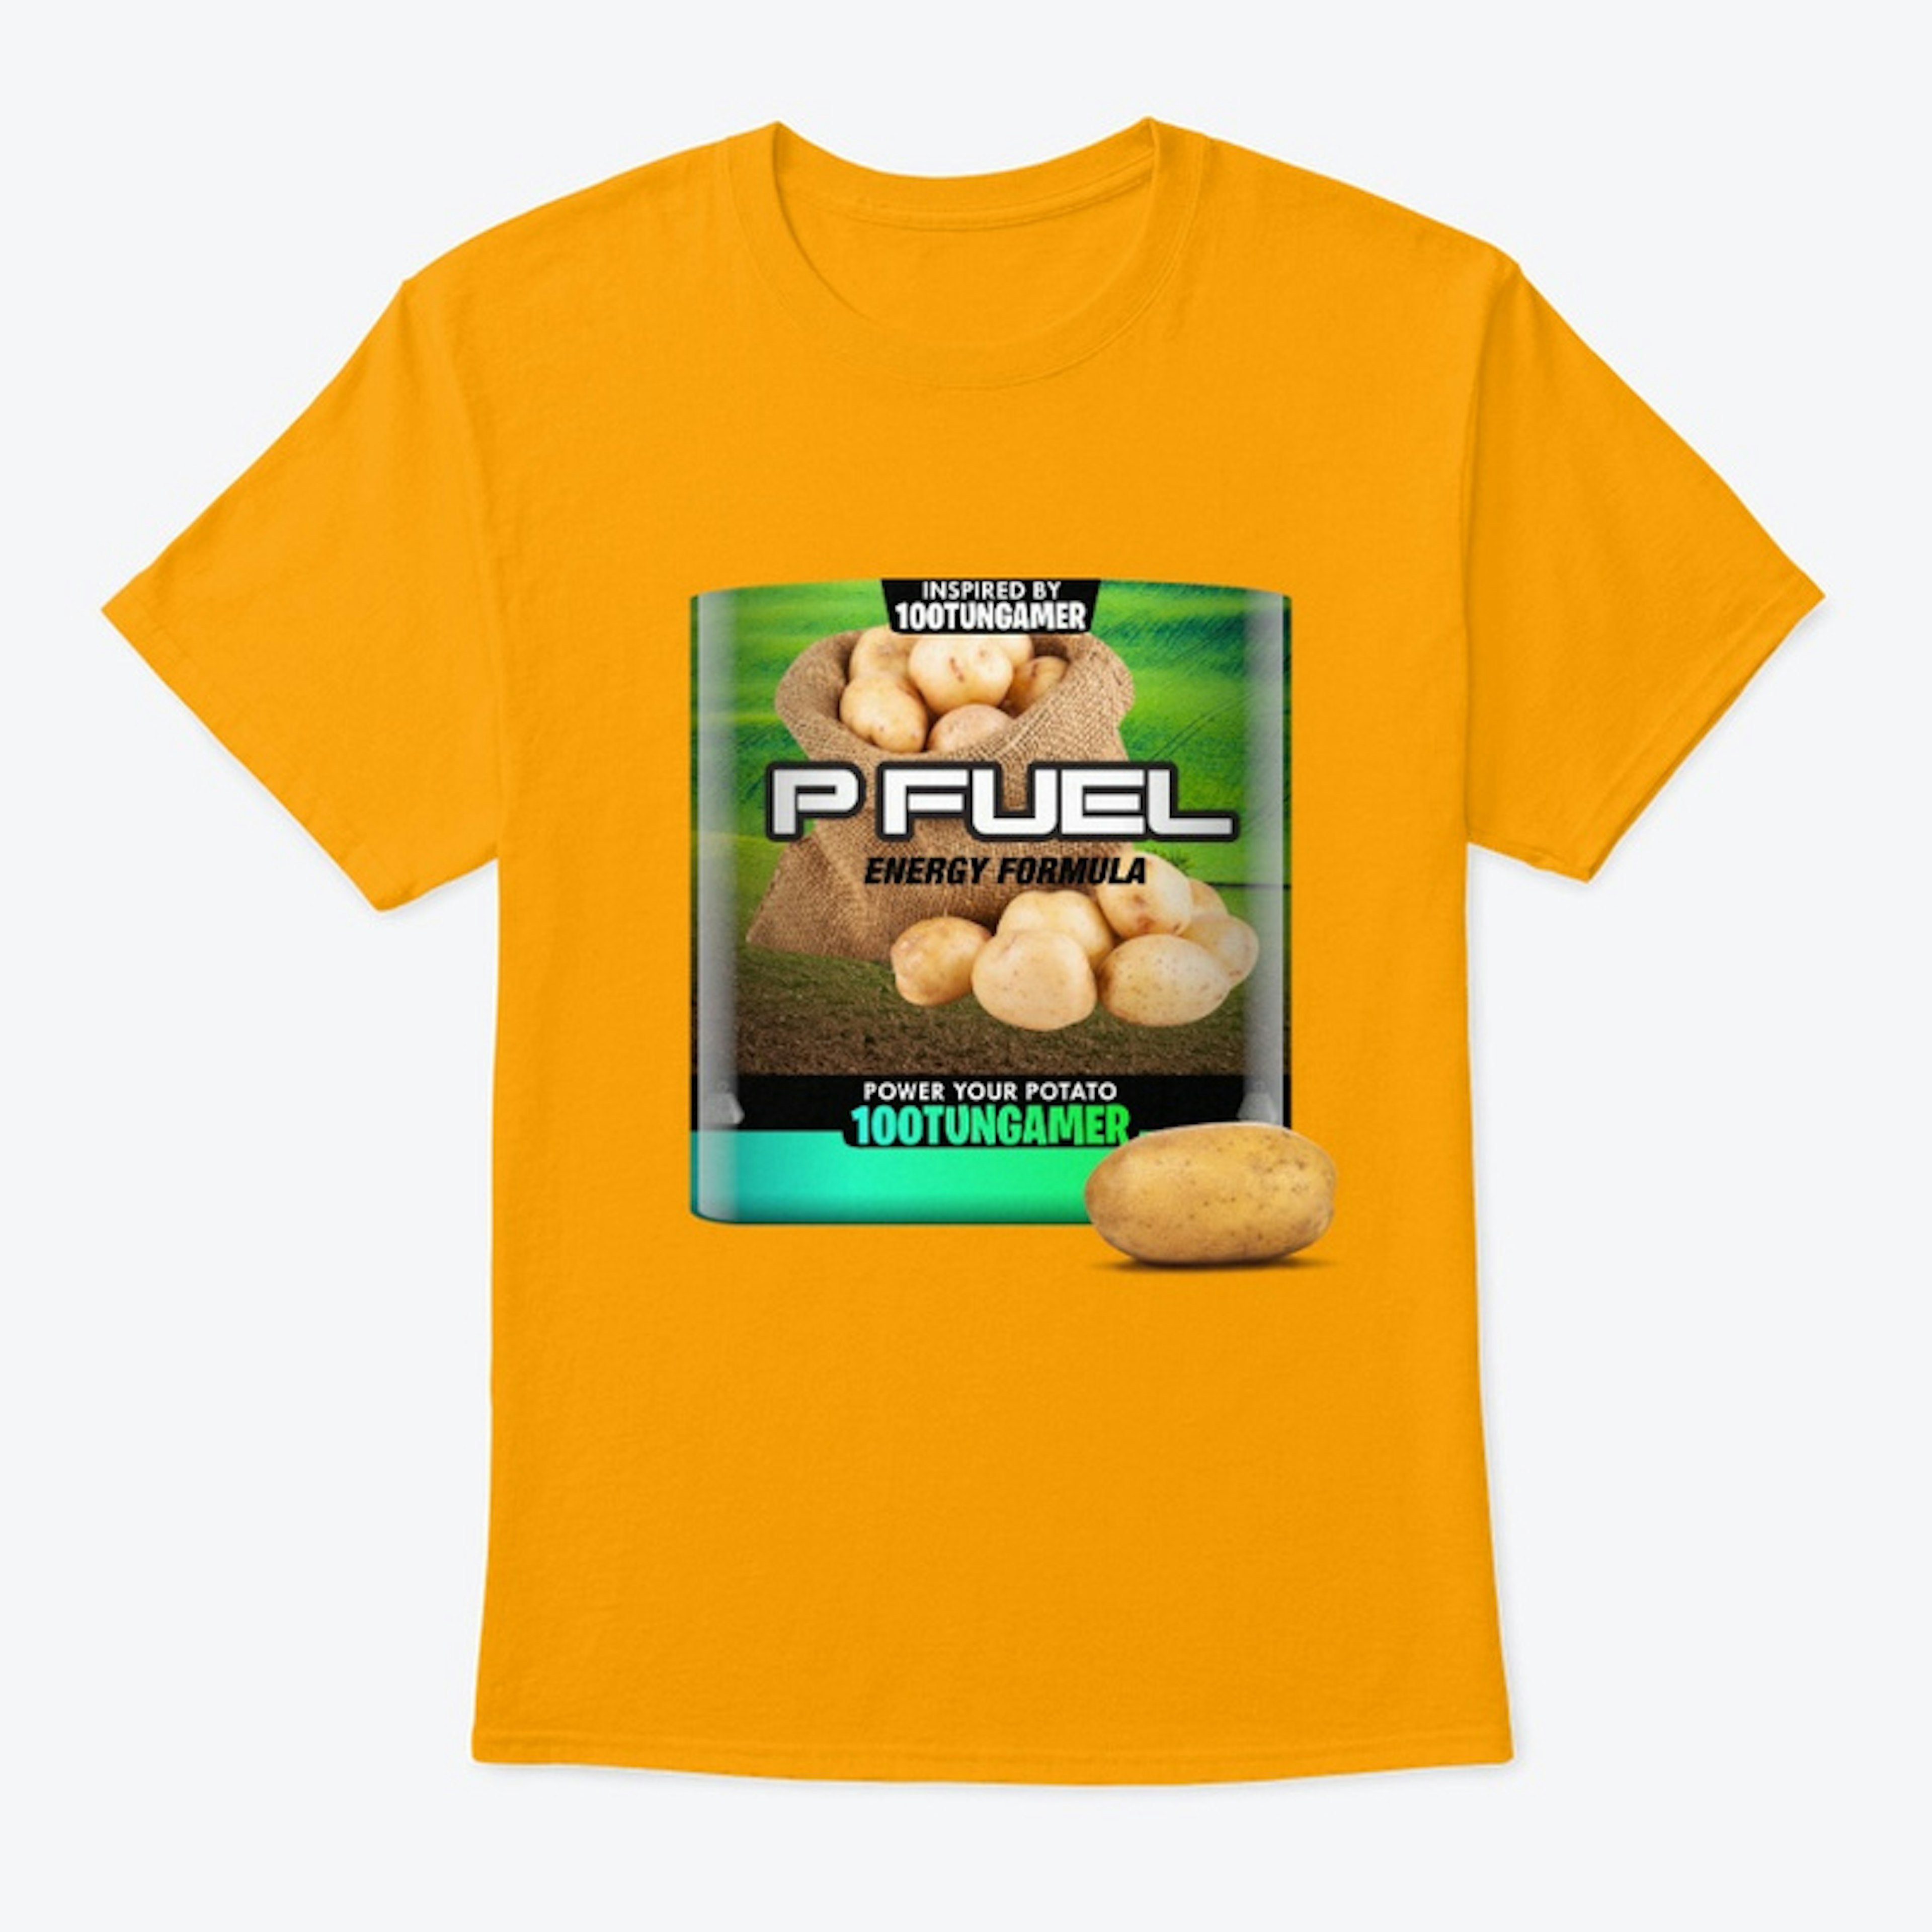 P-FUEL Power Your Potato